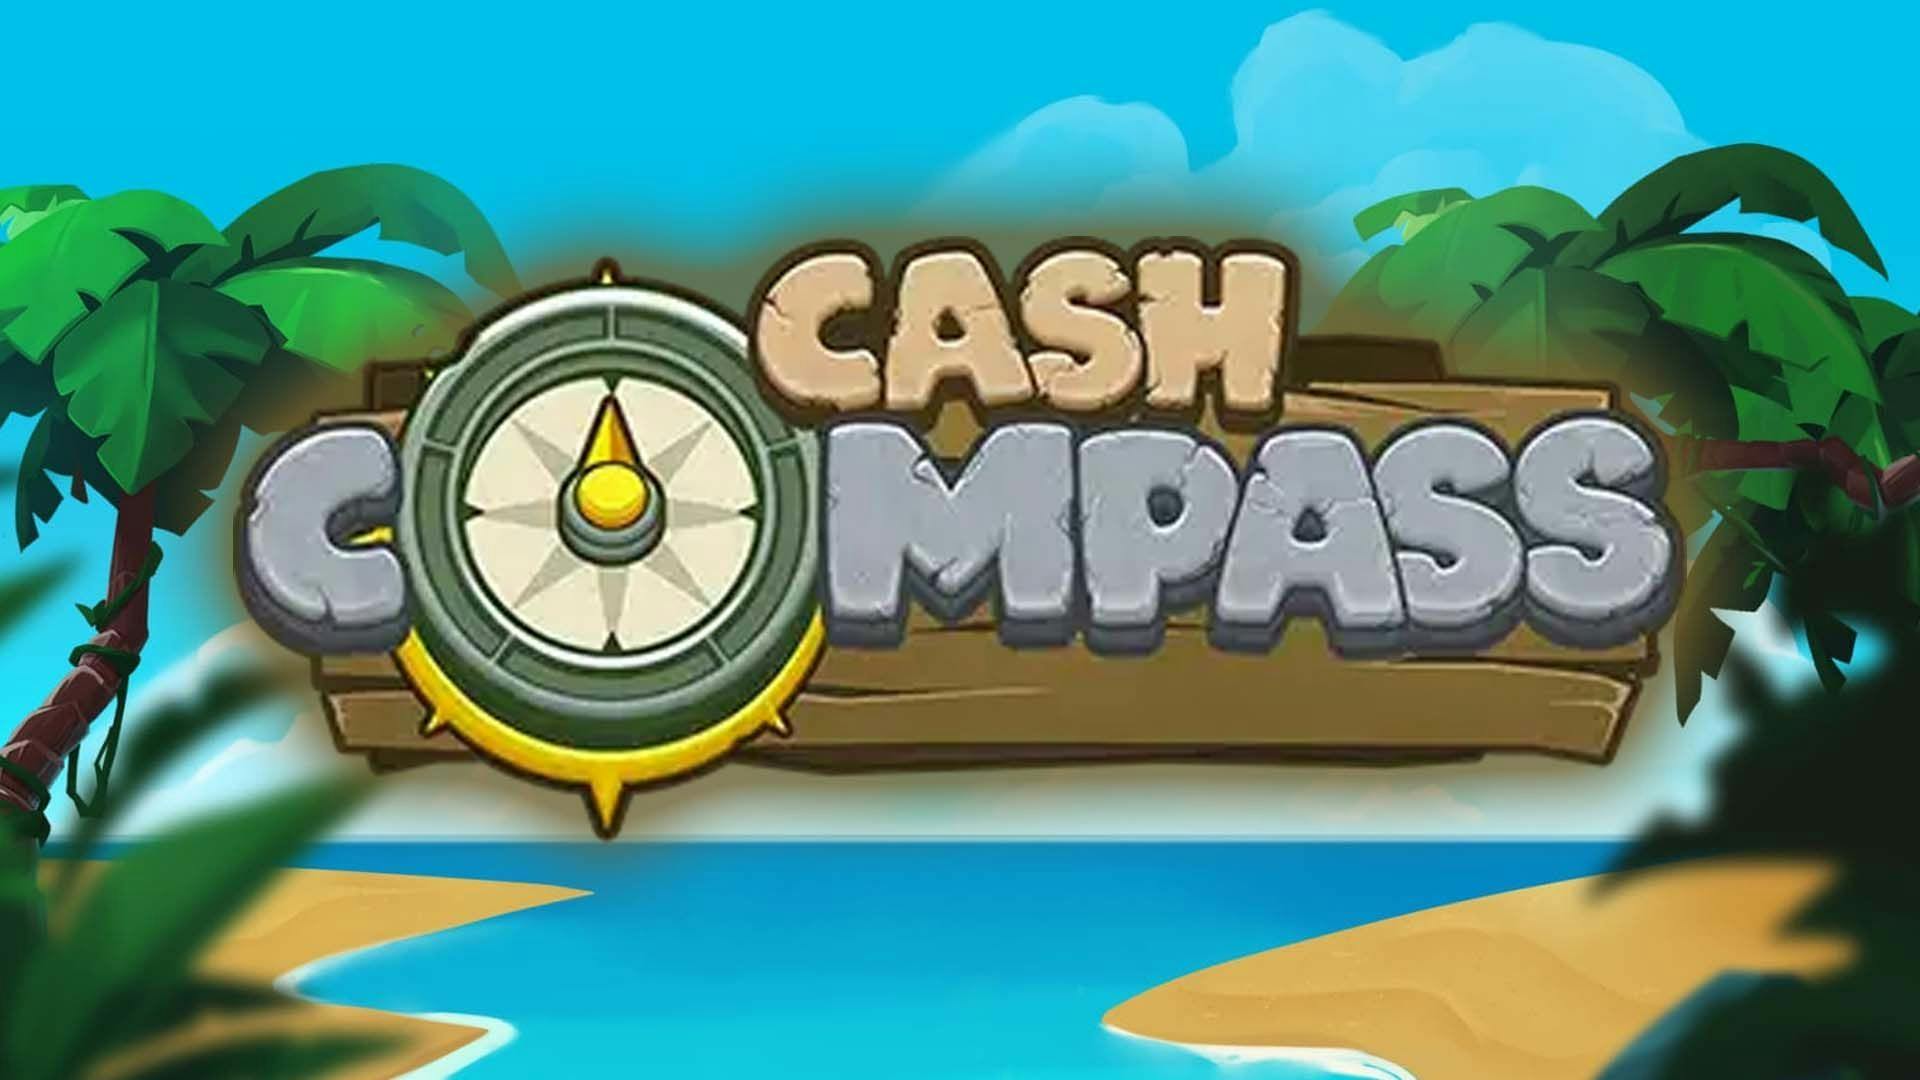 Cash Compass Slot Machine Online Free Game Play